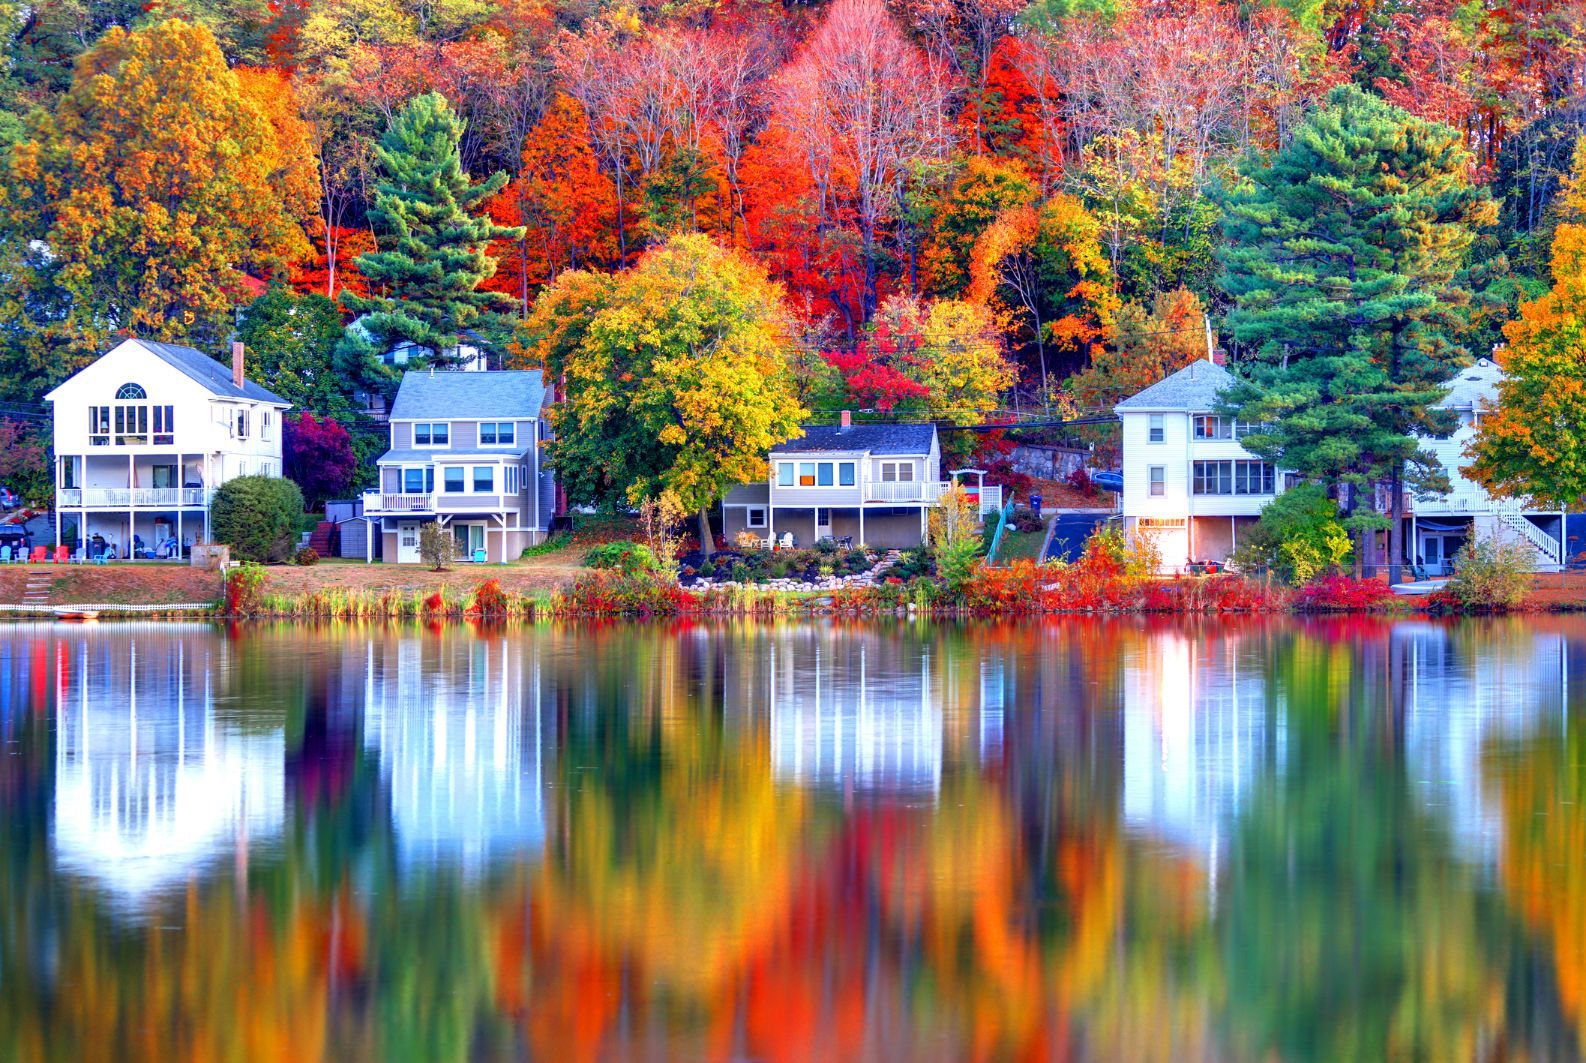 New England in peak foliage.